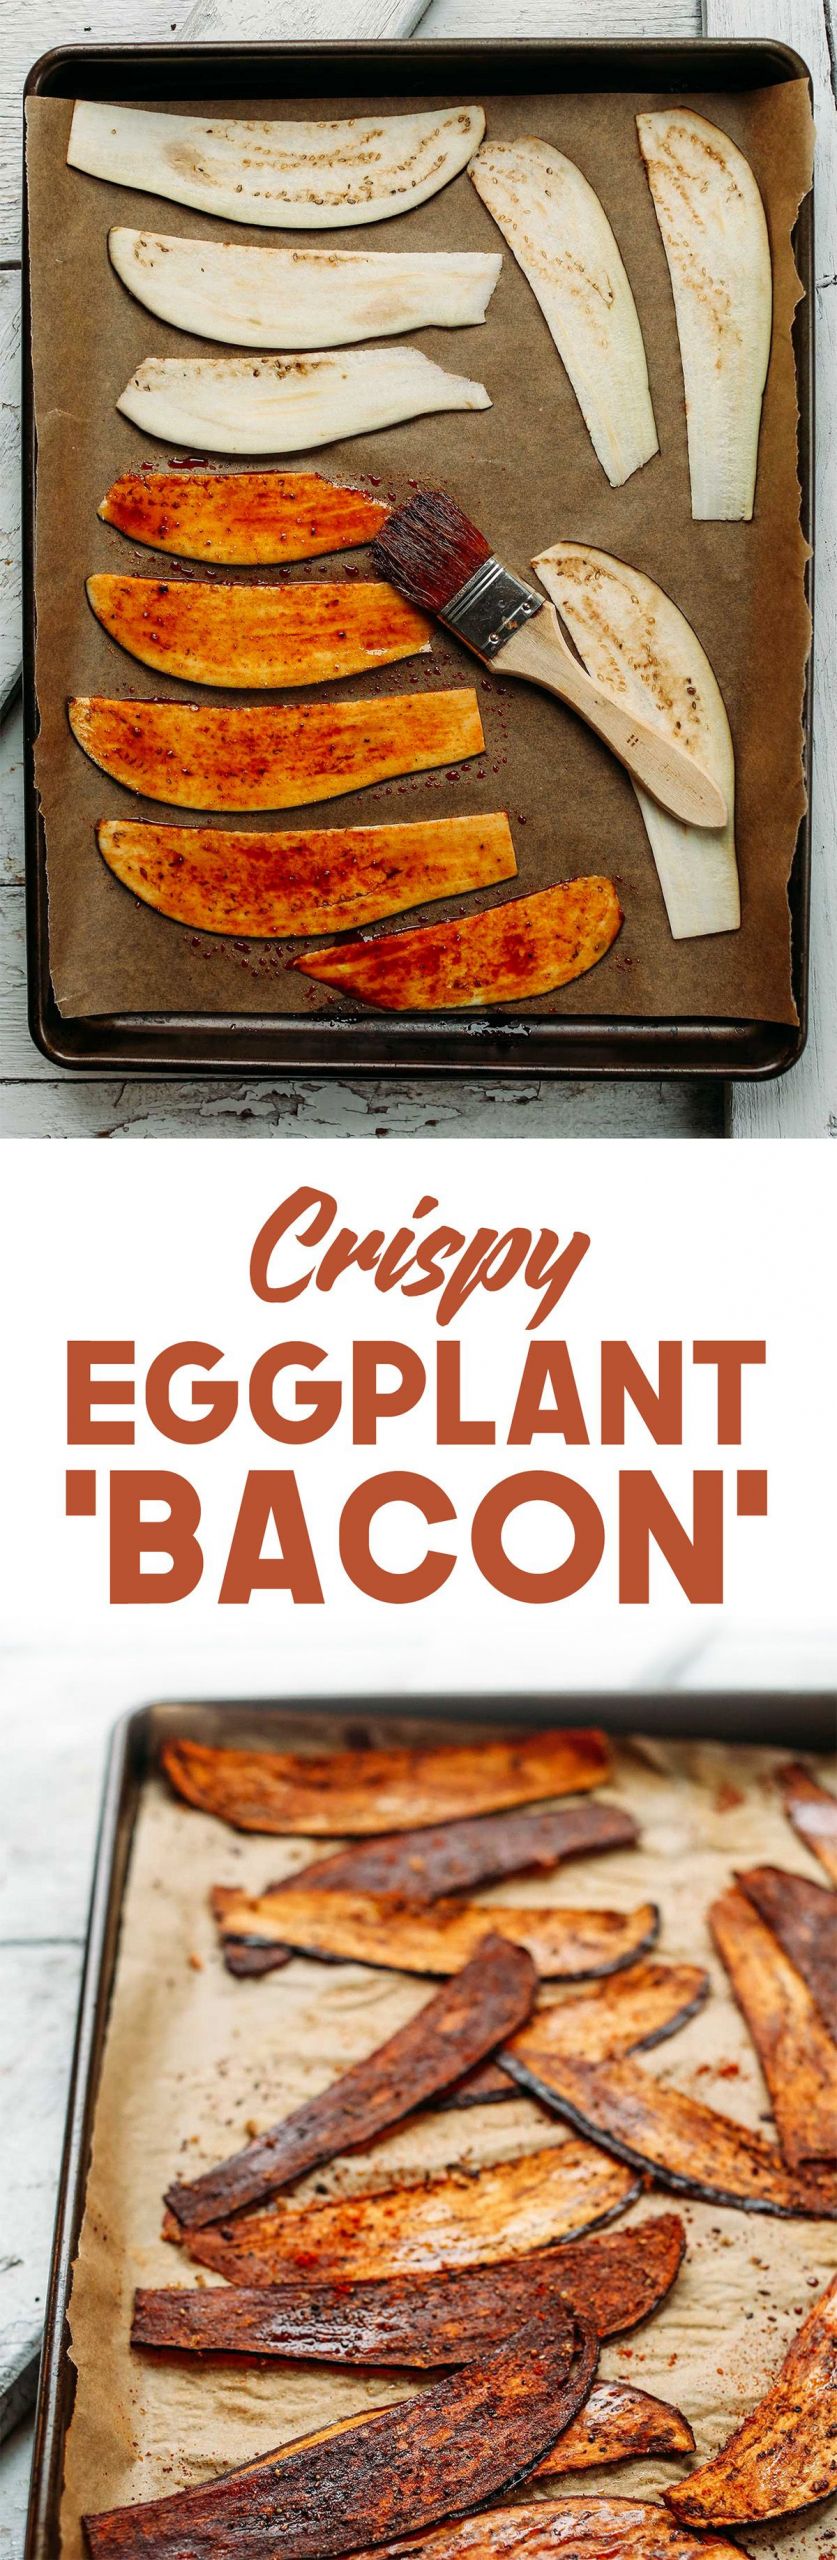 Eggplant Bacon Recipe
 Crispy Eggplant "Bacon" Recipe